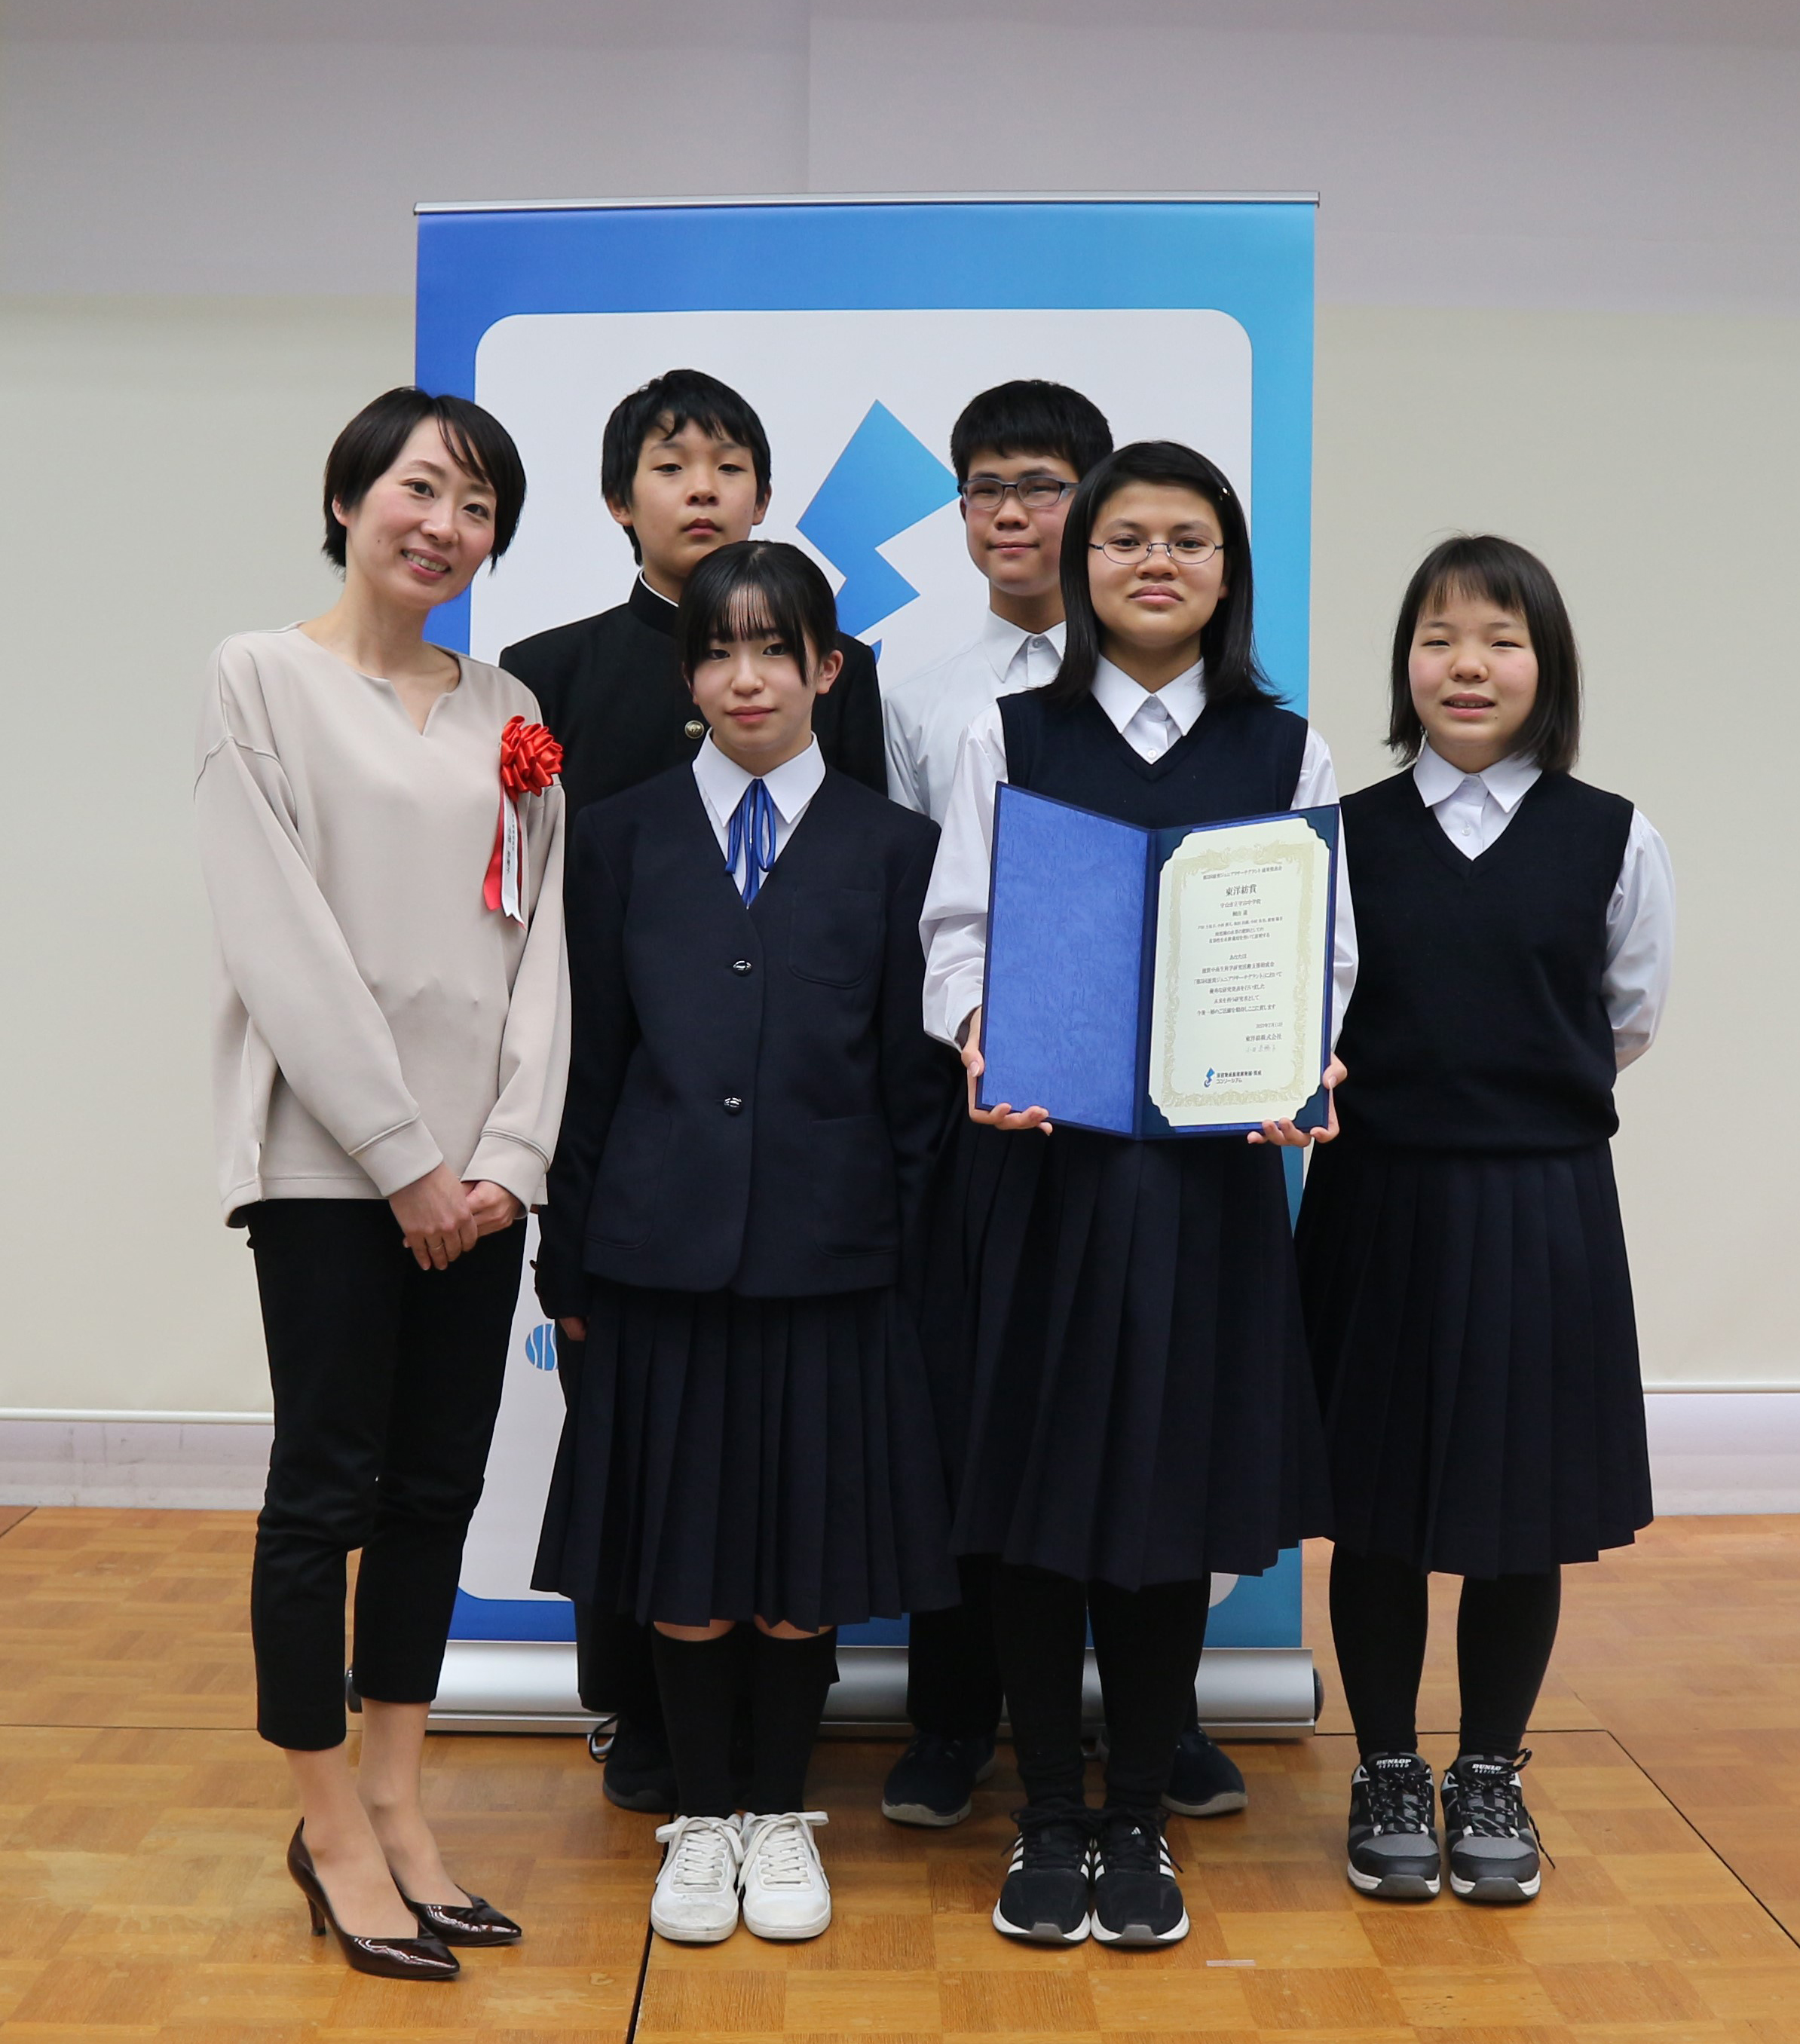 Ms. Uchiyama, and Moriyama Municipal Moriyama Junior High School students who received the Toyobo Prize.